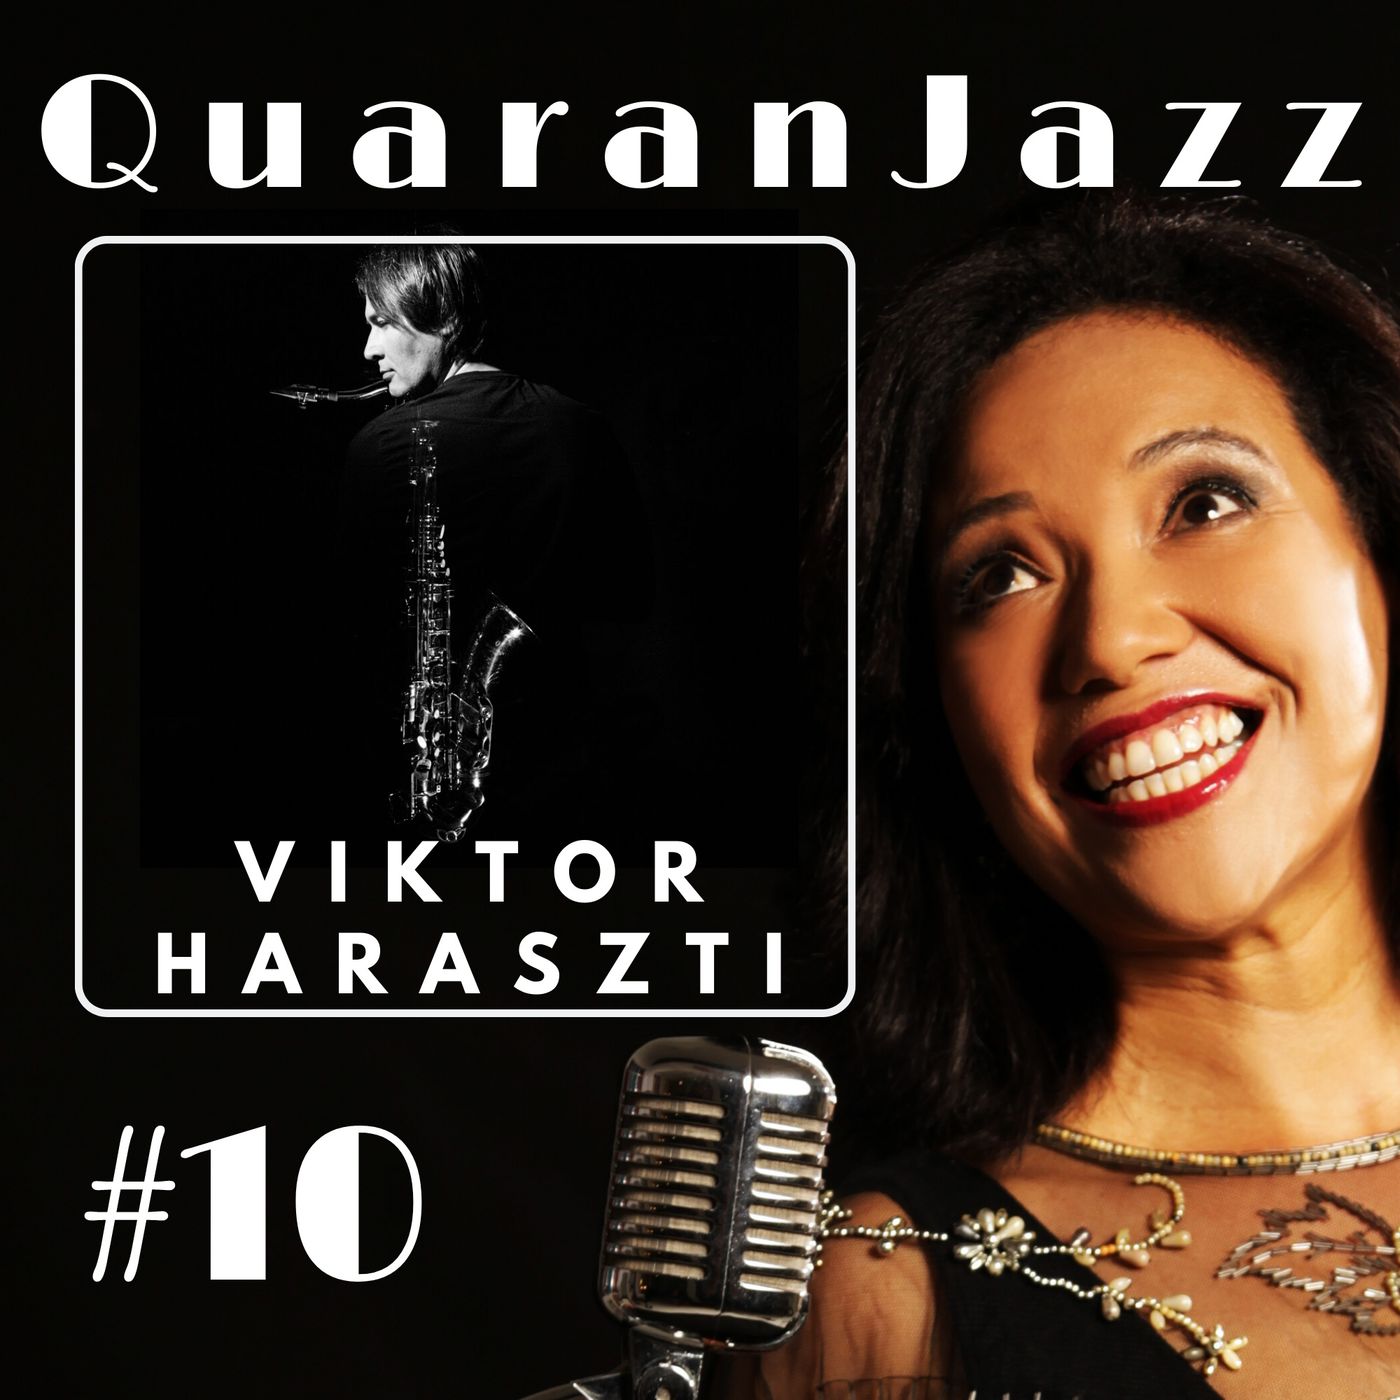 QuaranJazz episode #10 - Interview with Viktor Haraszti